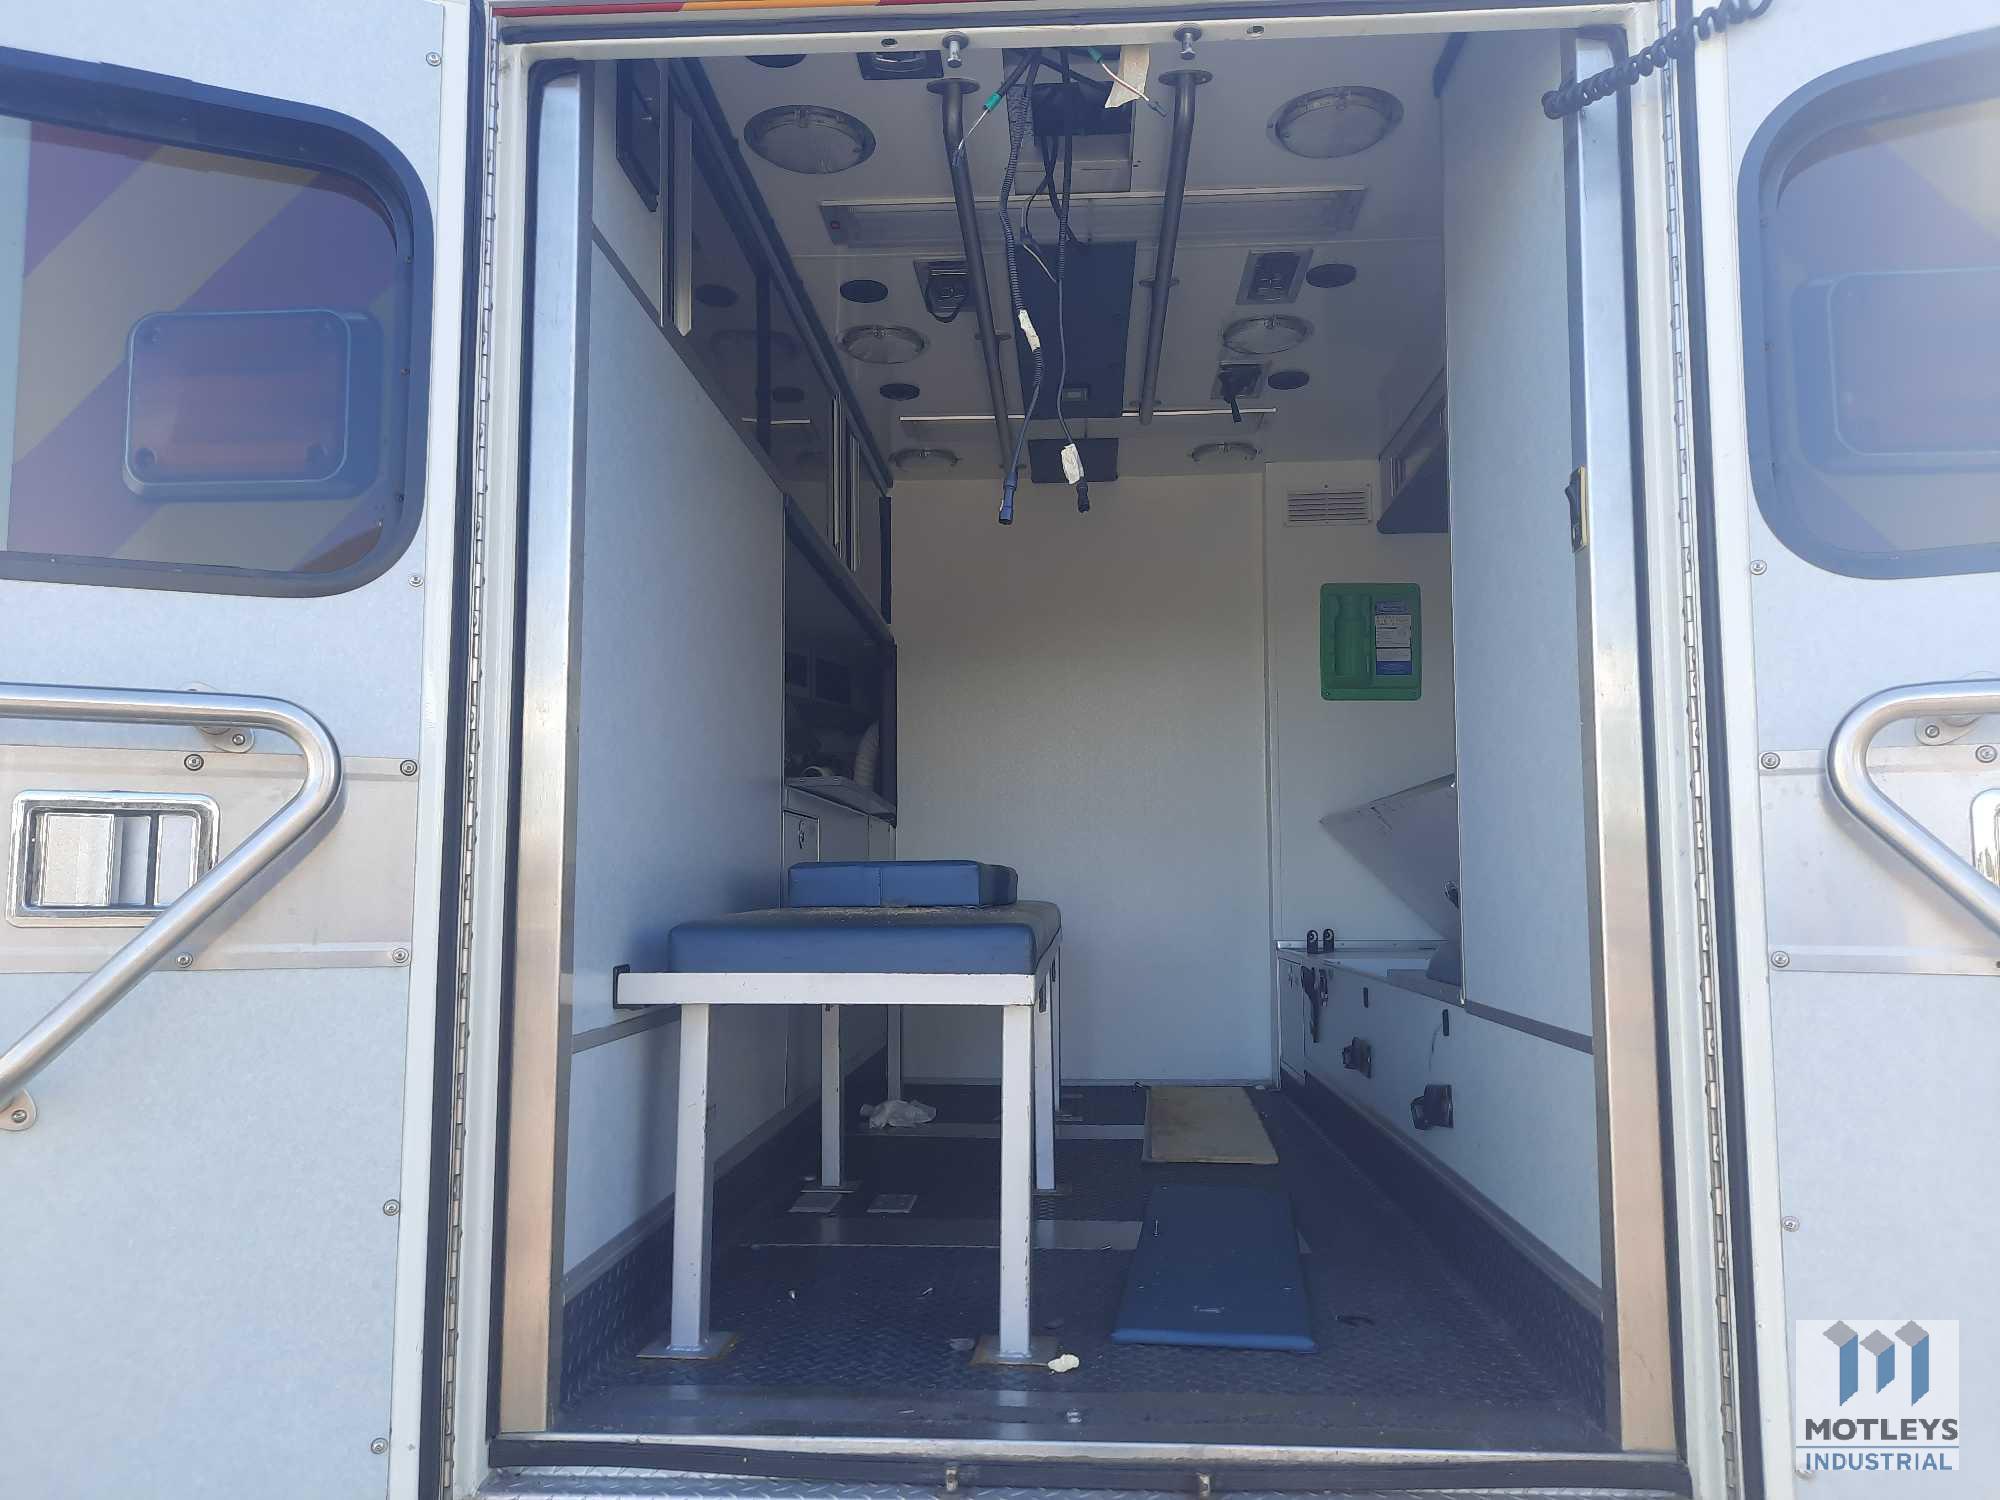 2010 Medtec Ambulance, International 4300LP